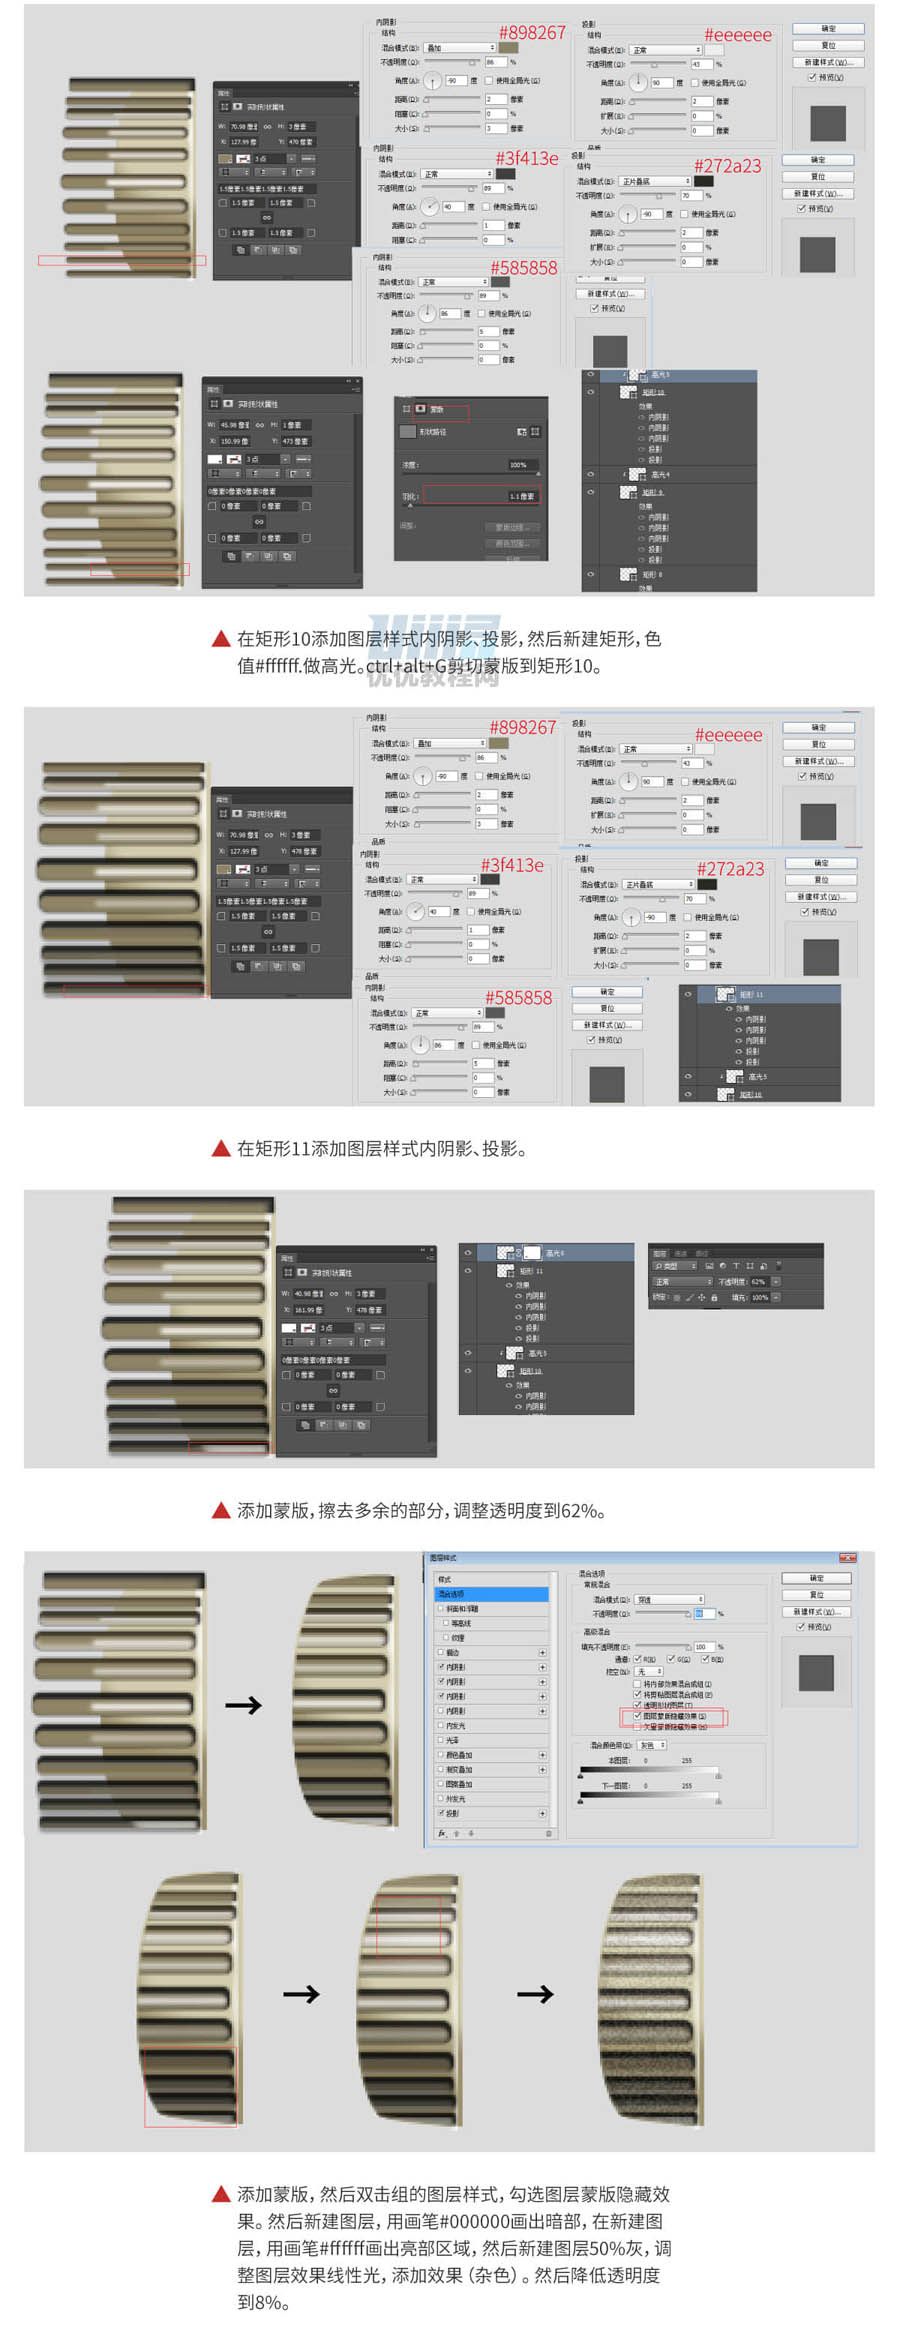 Photoshop绘制柯达老式相机图标教程,PS教程,素材中国网